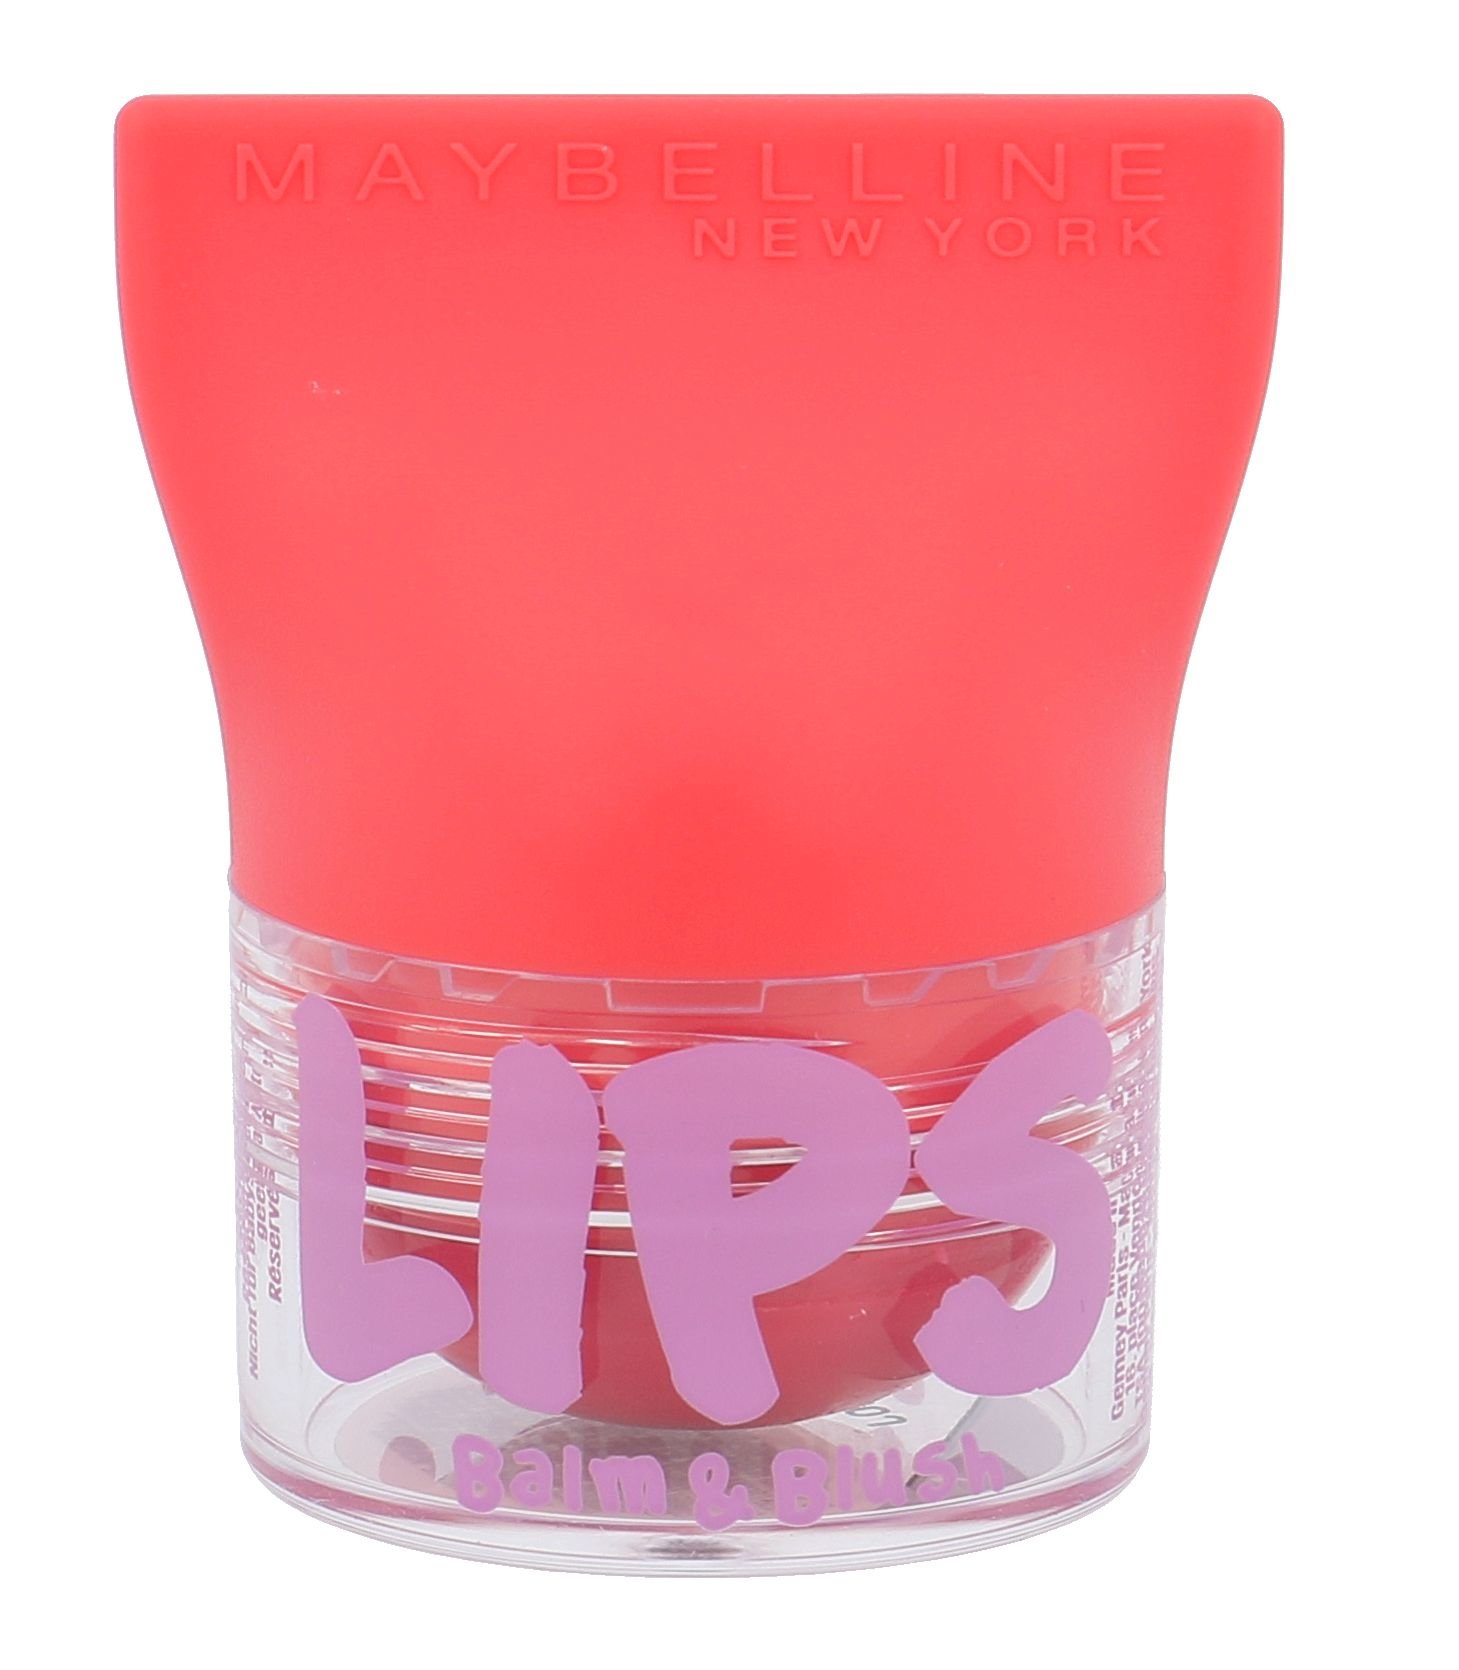 Maybelline Baby Lips Balm & Blush